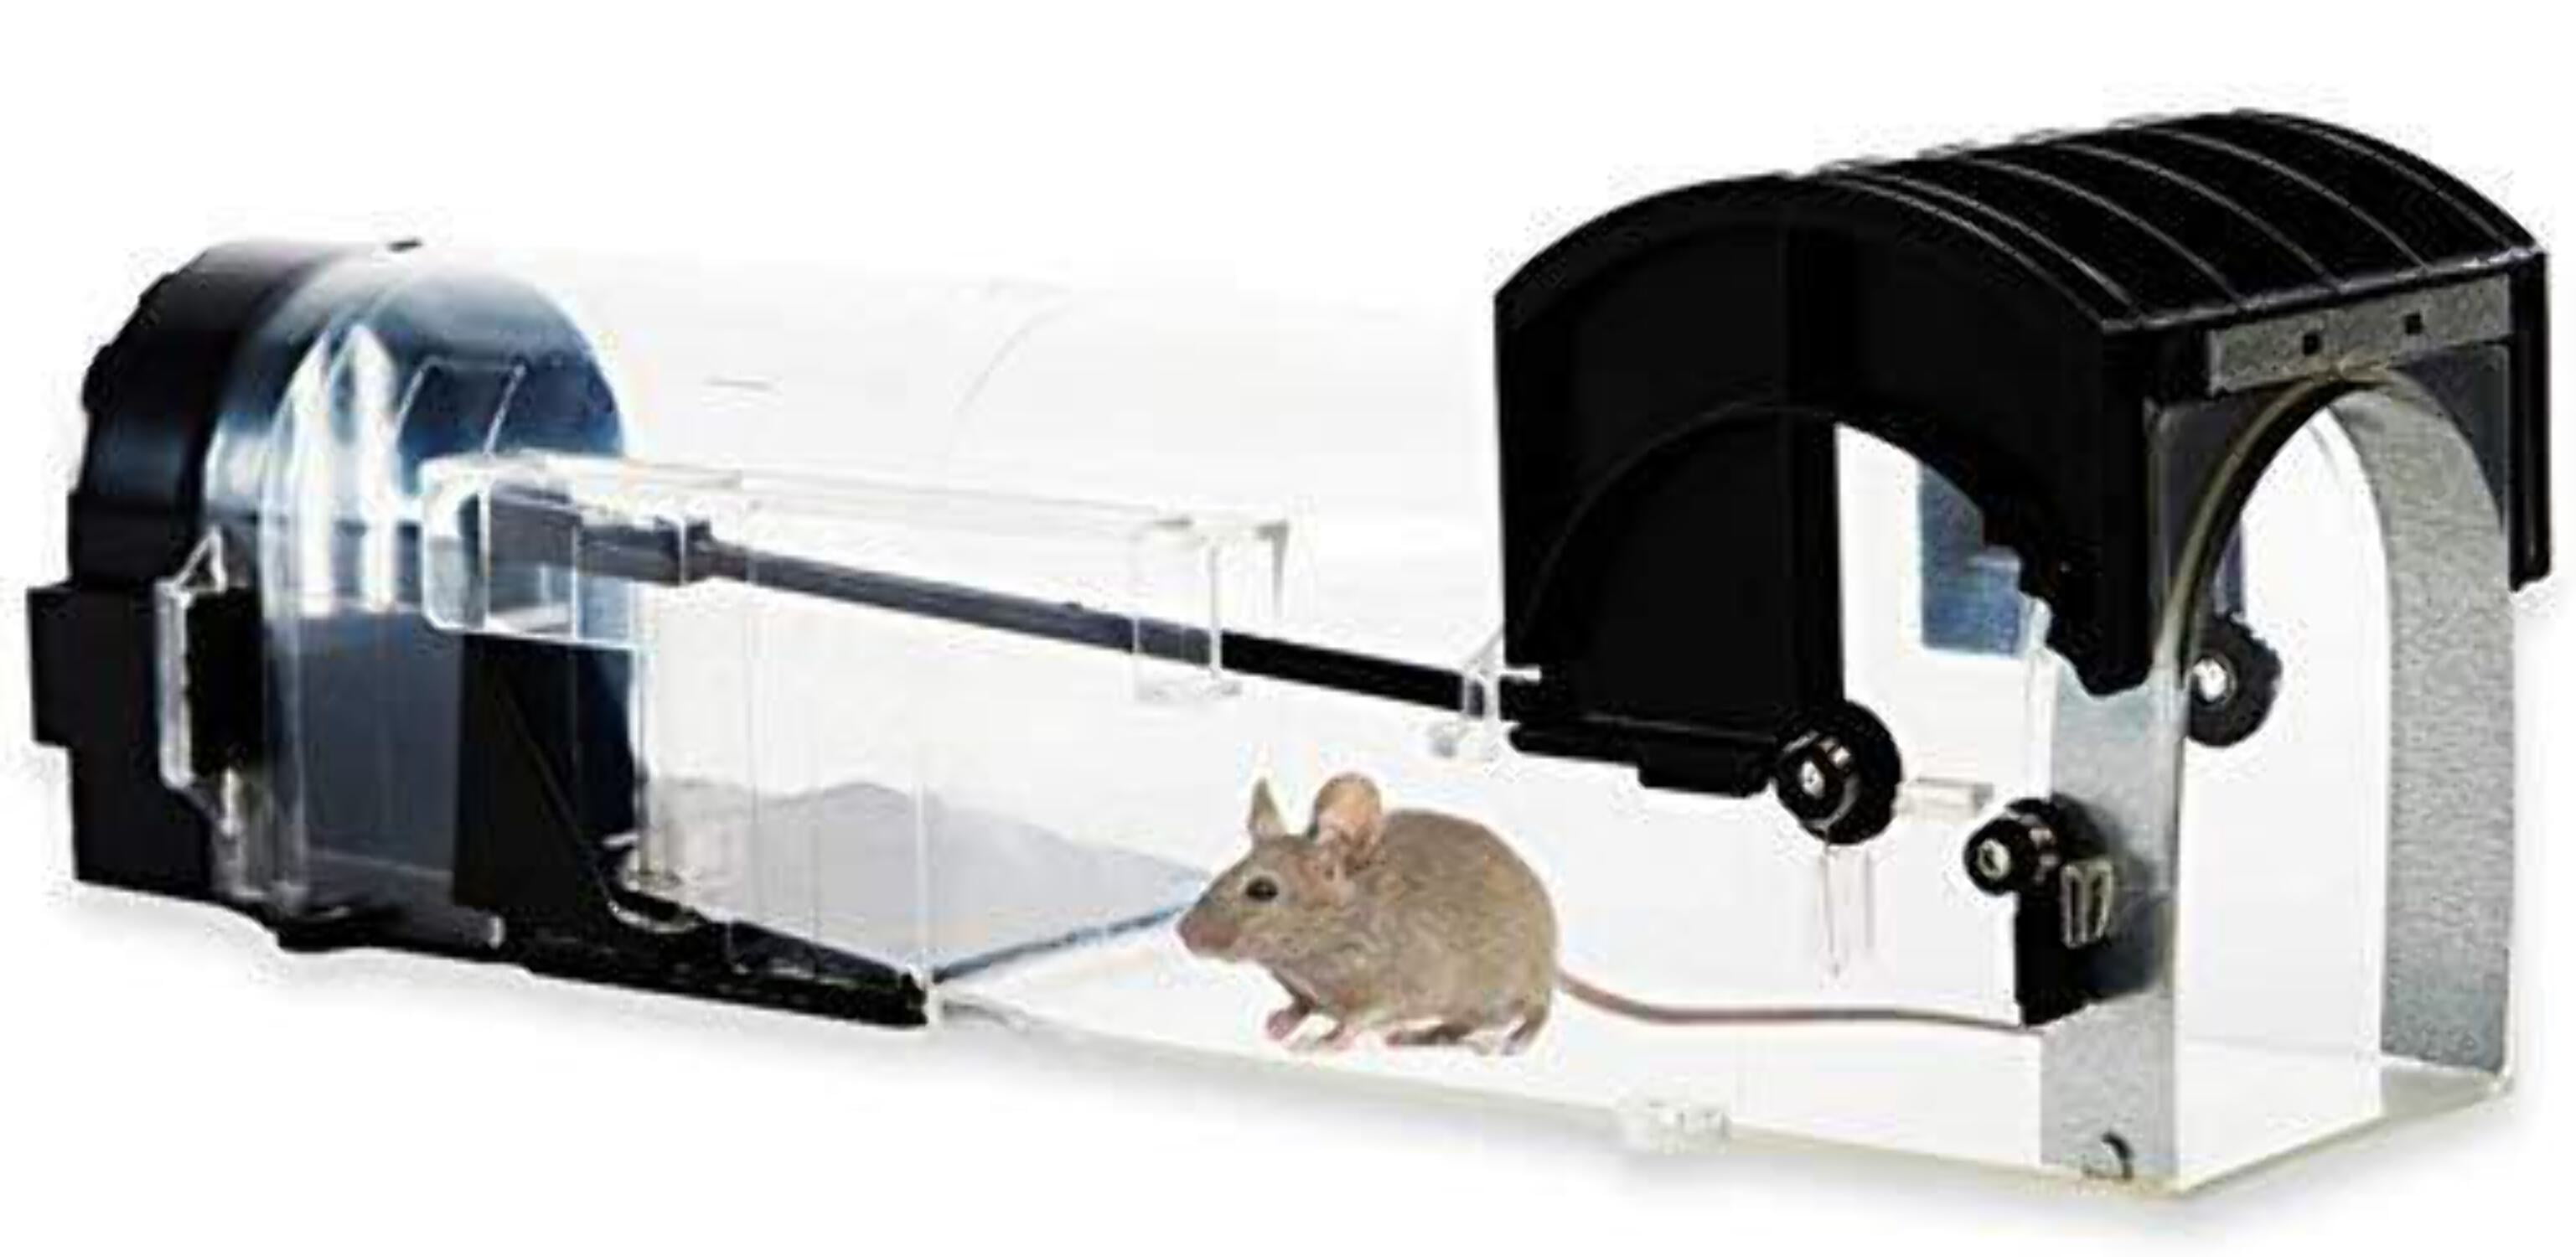 1PCS Roller Mouse Killer Rat Trap Kill or Humane Live Catch